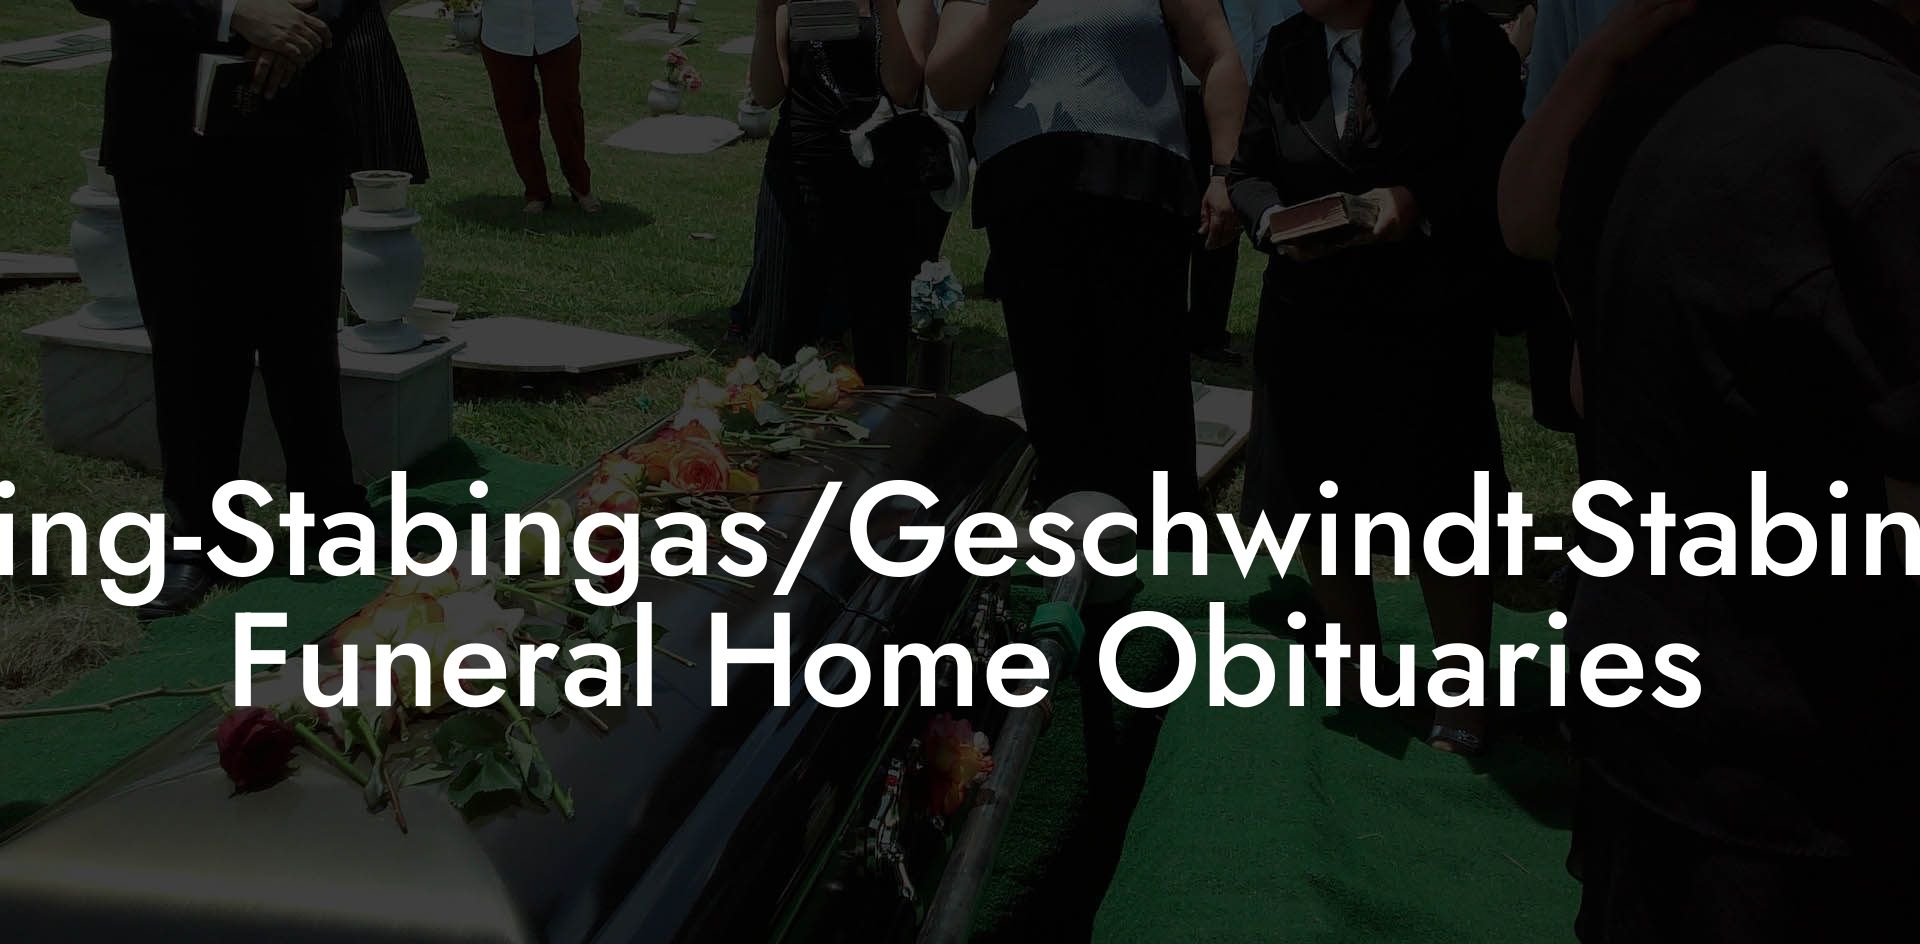 Ebling-Stabingas/Geschwindt-Stabingas Funeral Home Obituaries